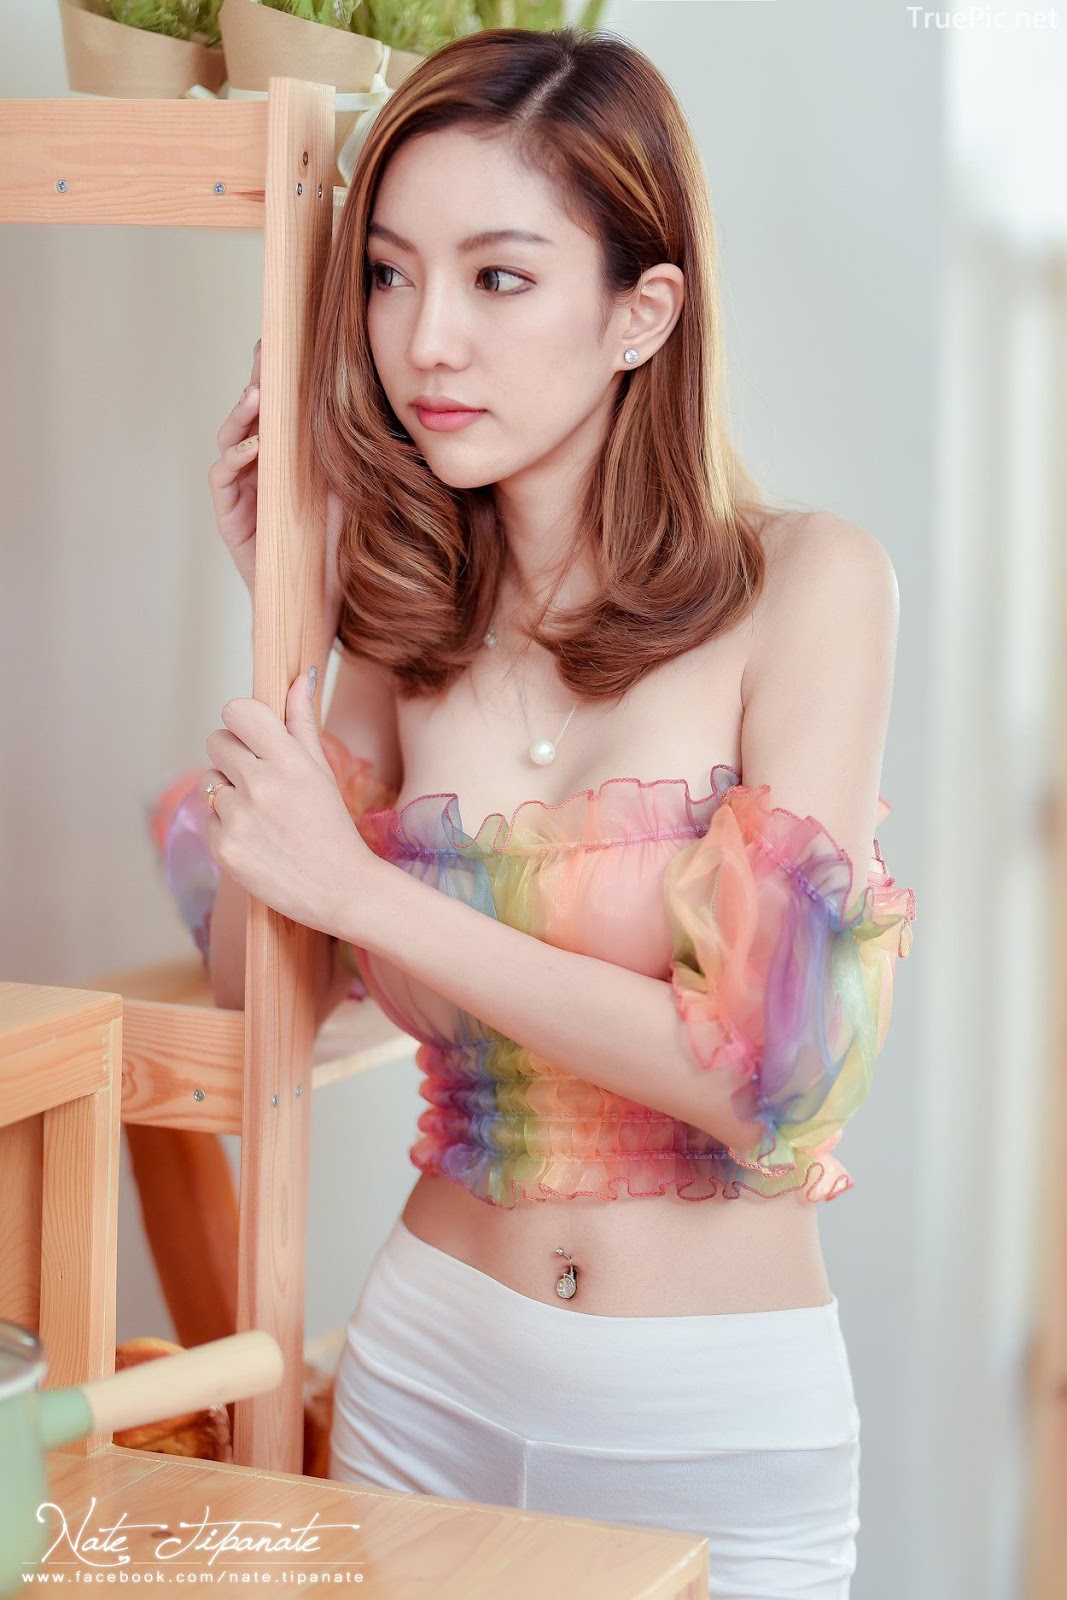 Thailand Model - Watcharaporn Wichithum - Seven Colors Rainbow - TruePic.net - Picture 6